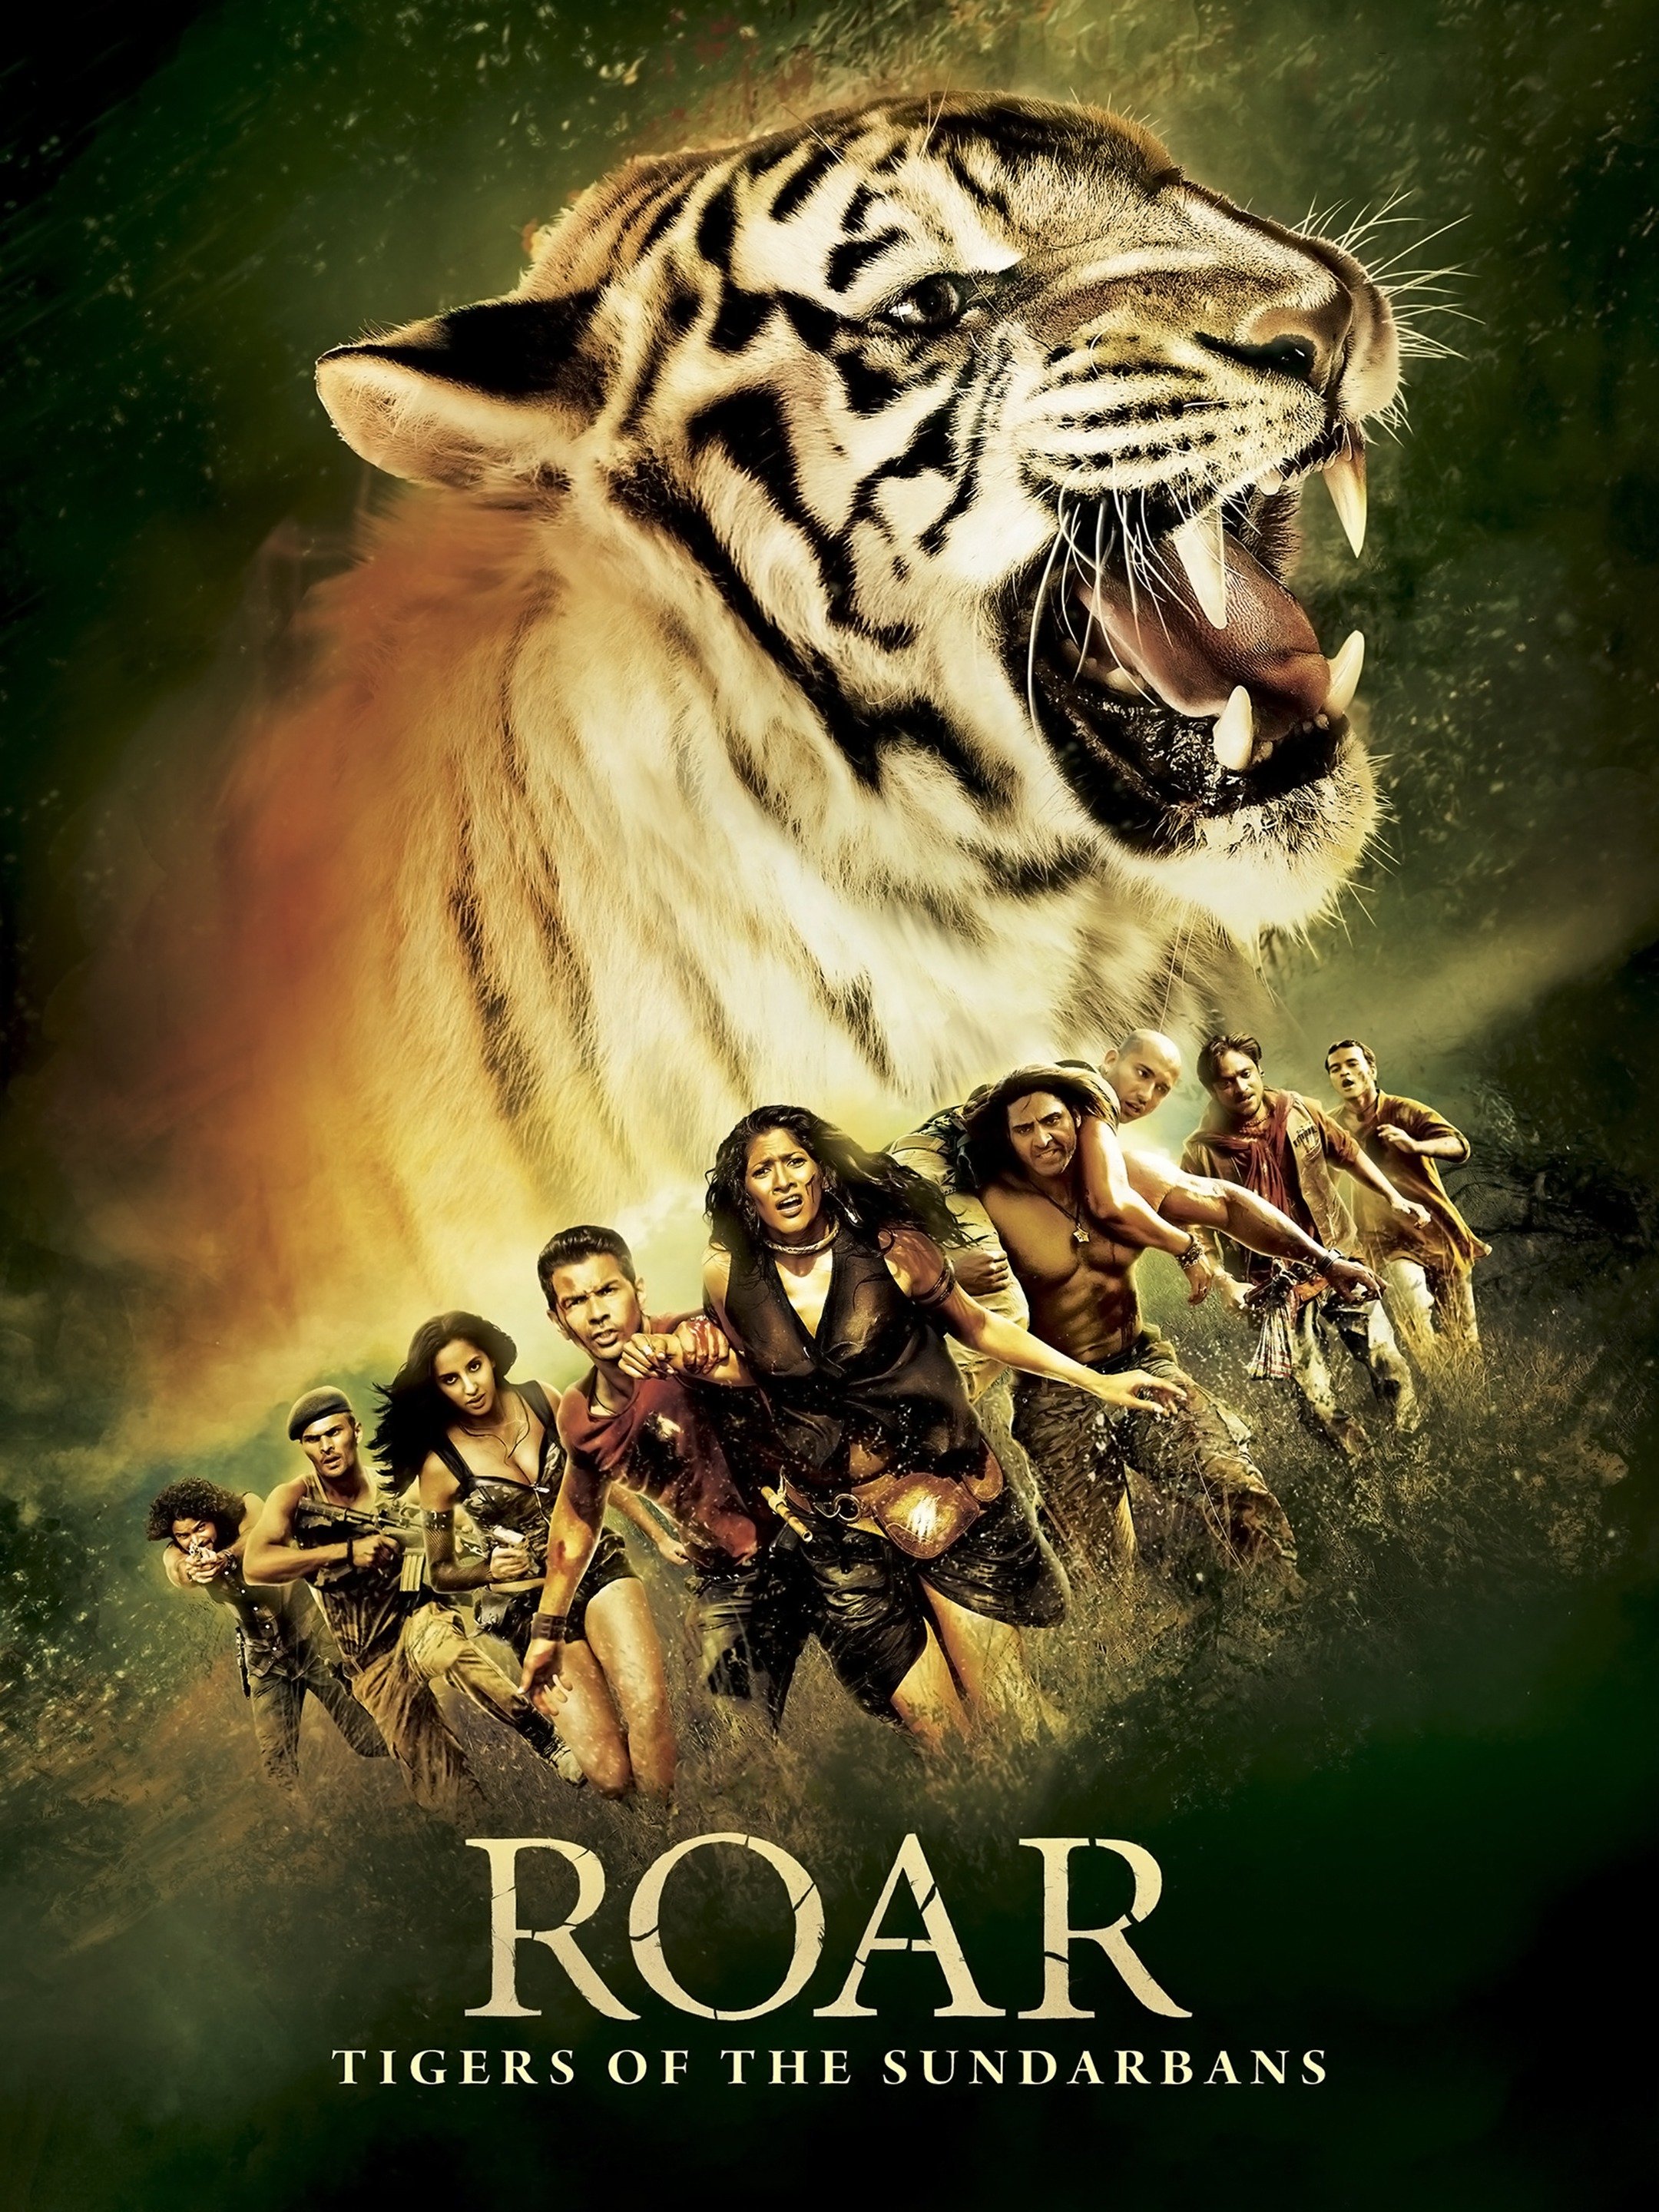 Roar: Tigers of the Sundarbans (2014) - Rotten Tomatoes